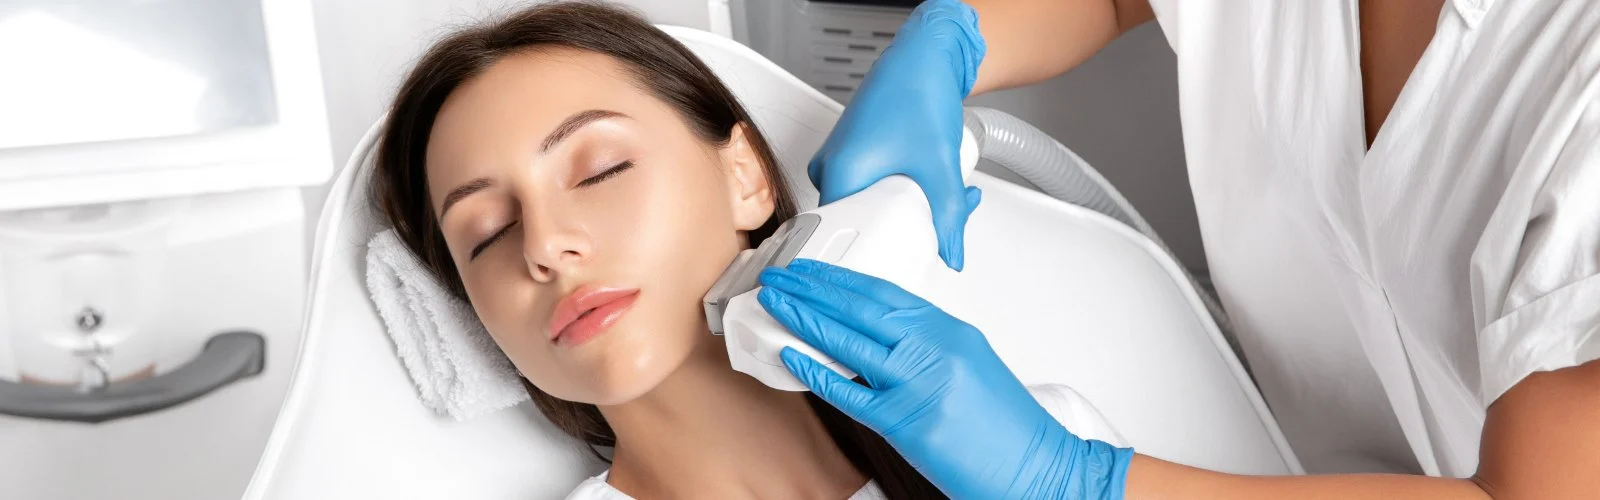 Face Laser Treatment | Salon Dolce Vita